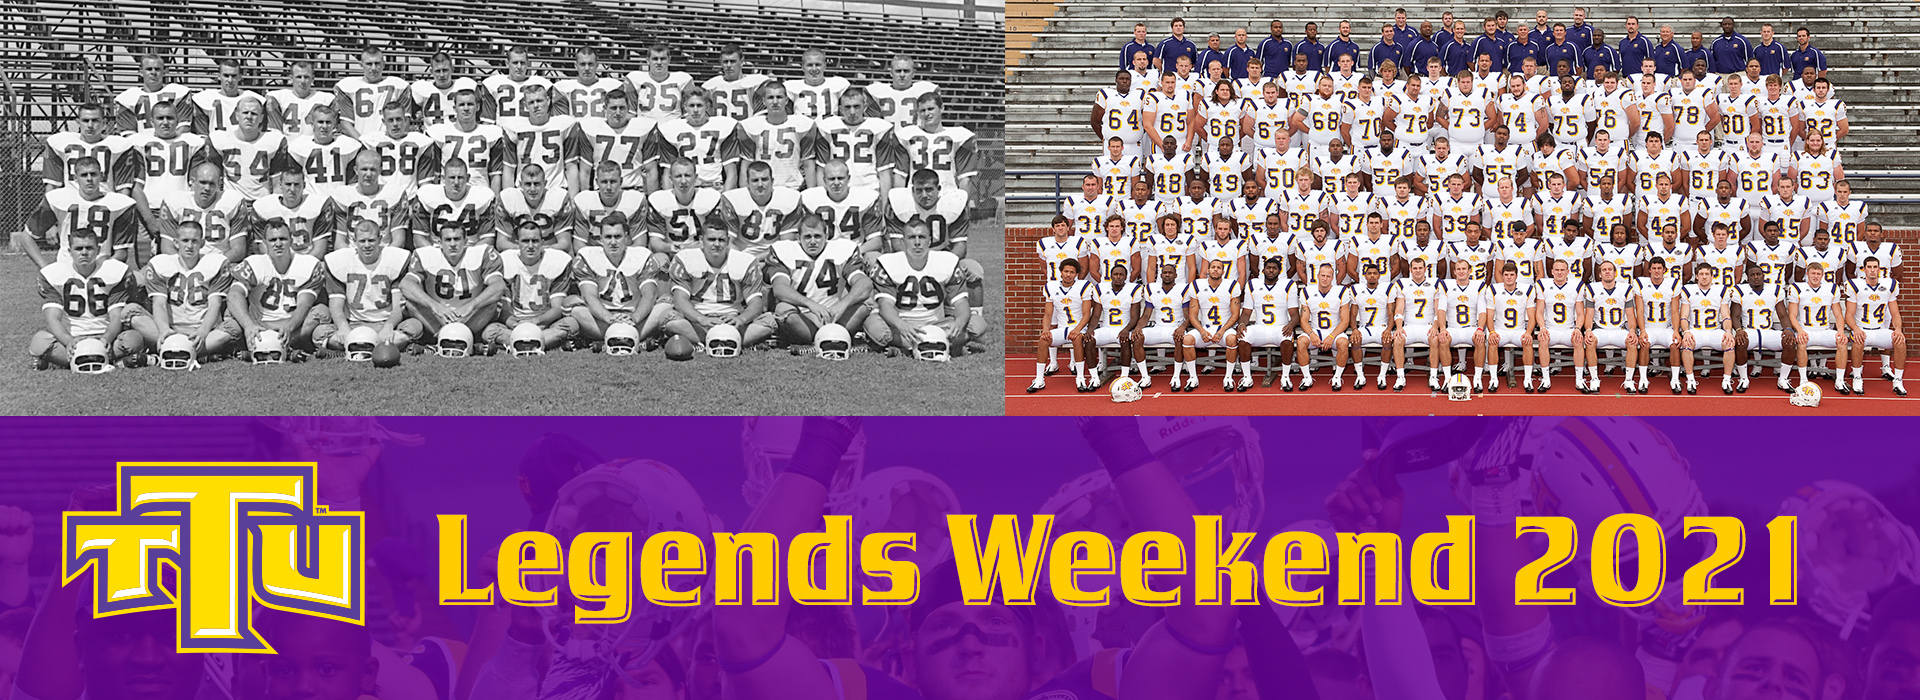 1961, 2011 TTU Football teams to be honored Saturday for Legends Weekend